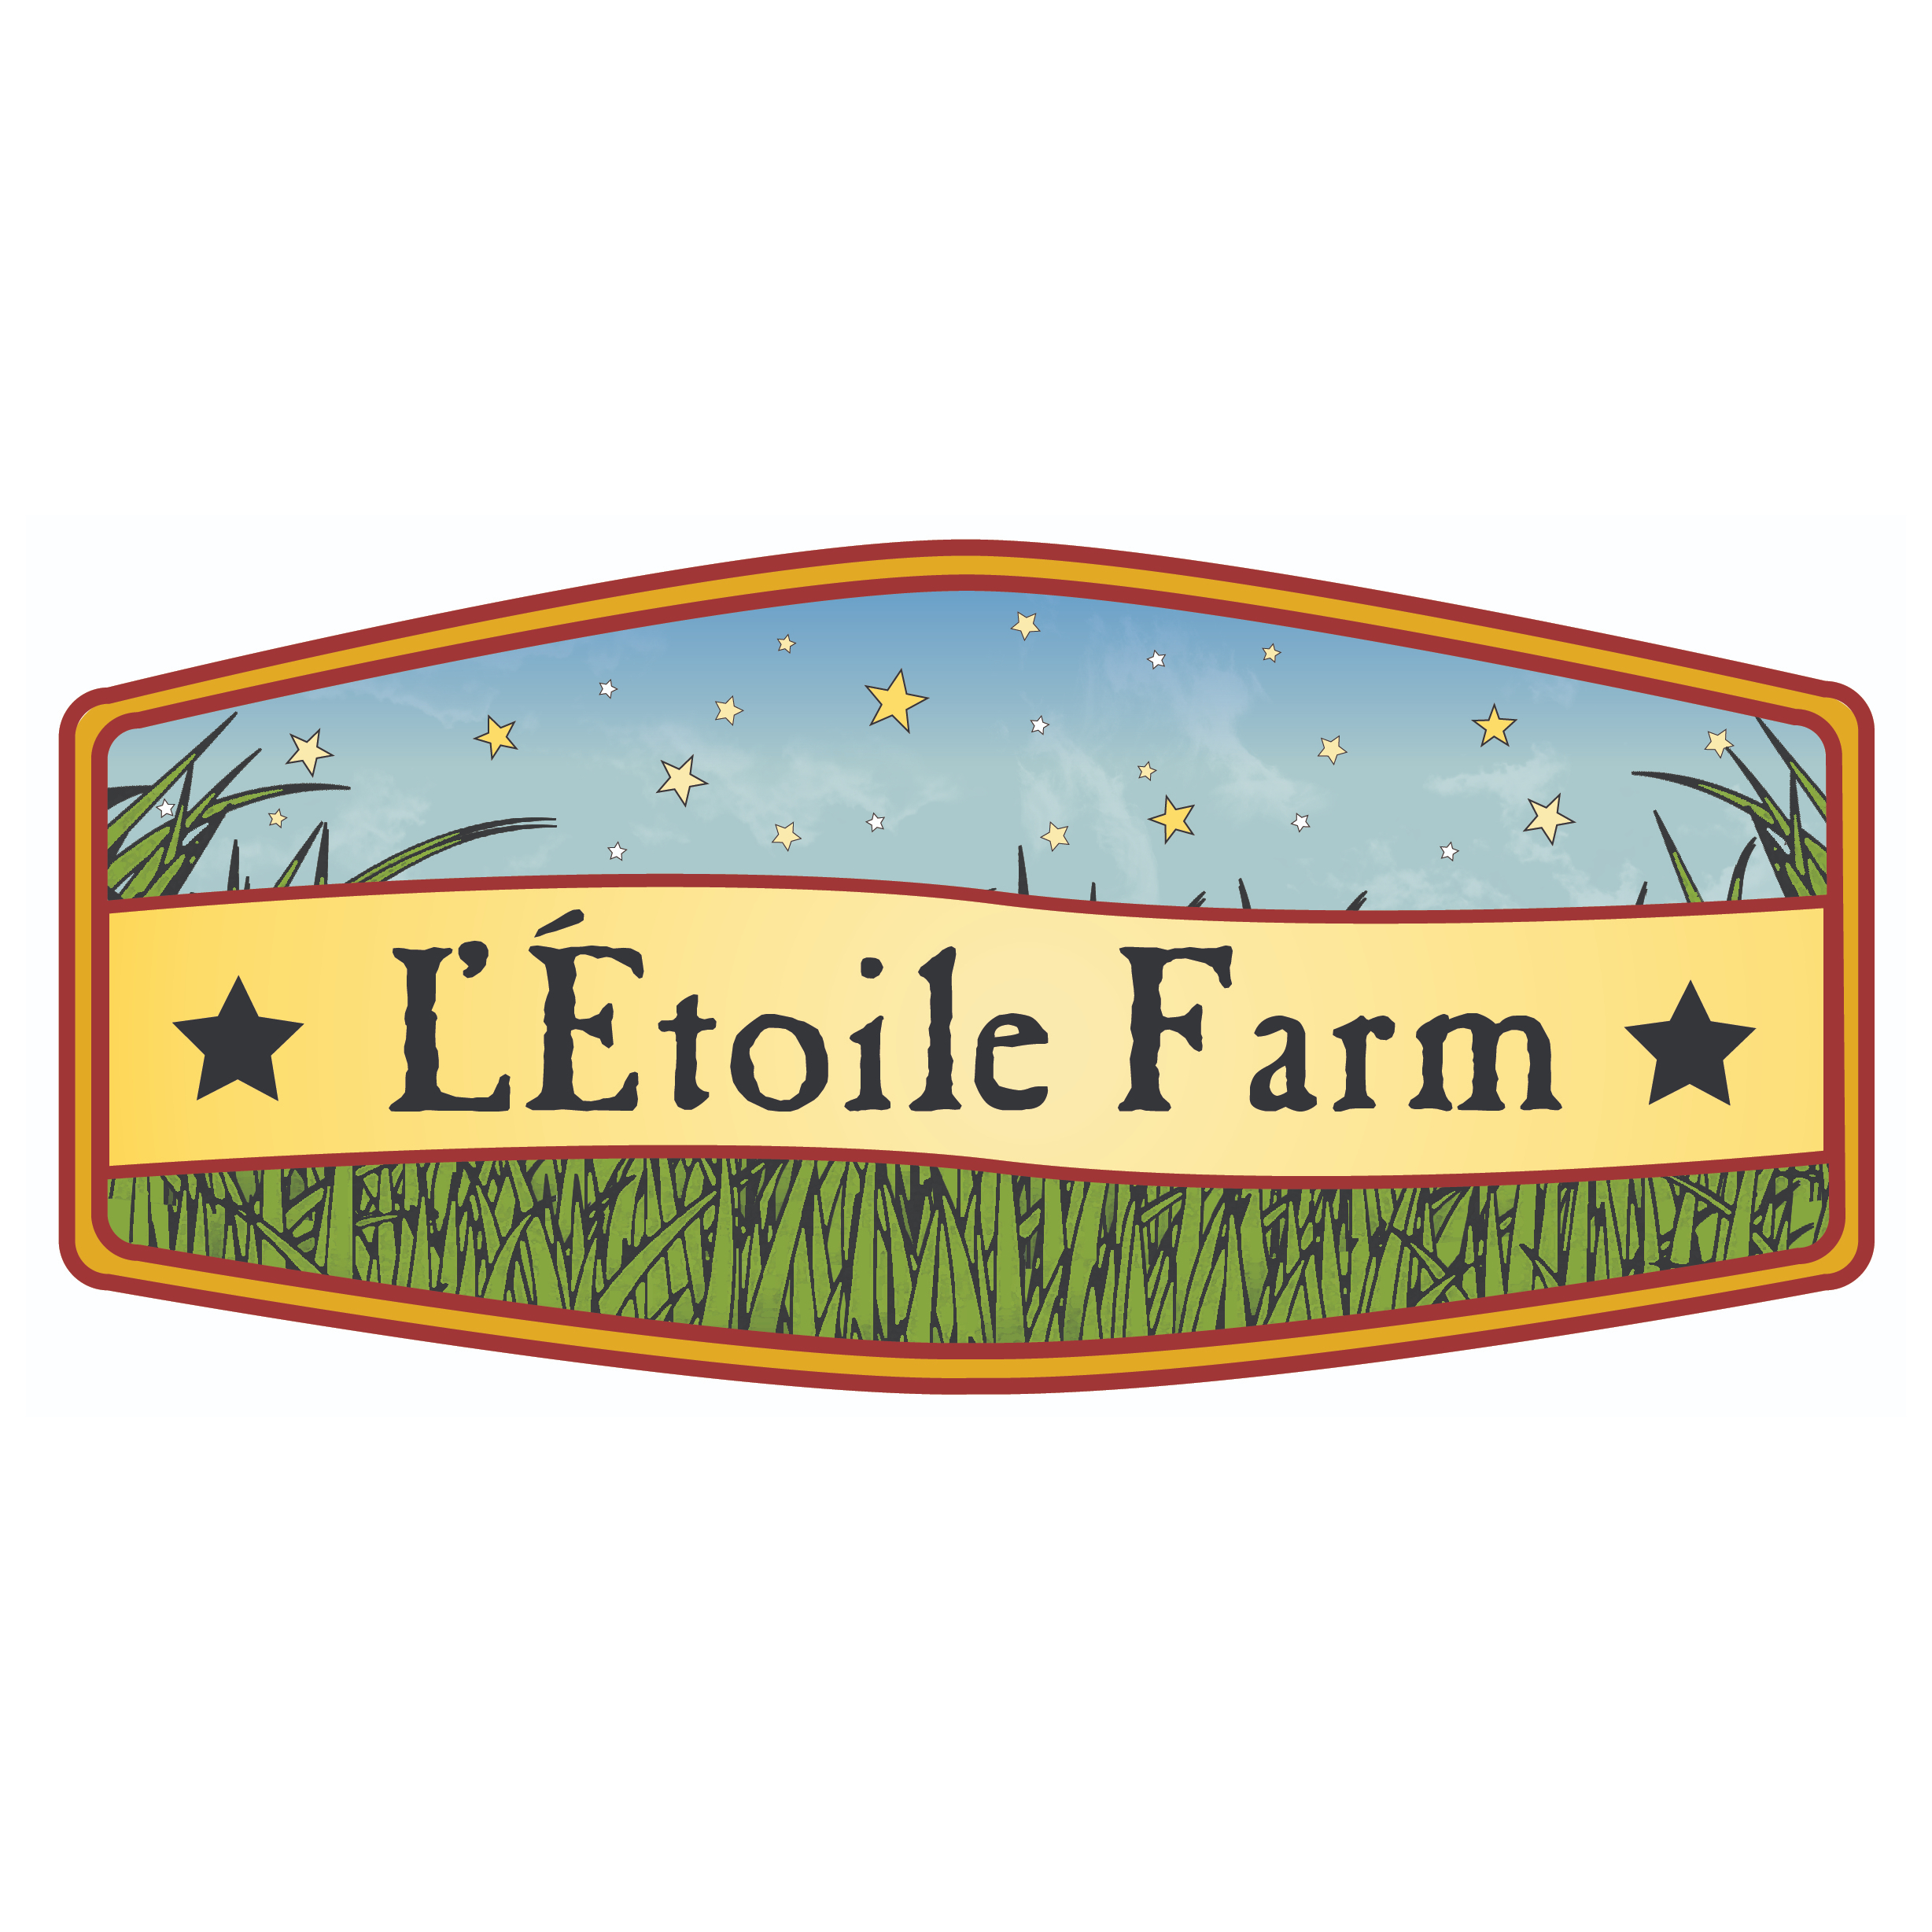 L'Etoile Farm